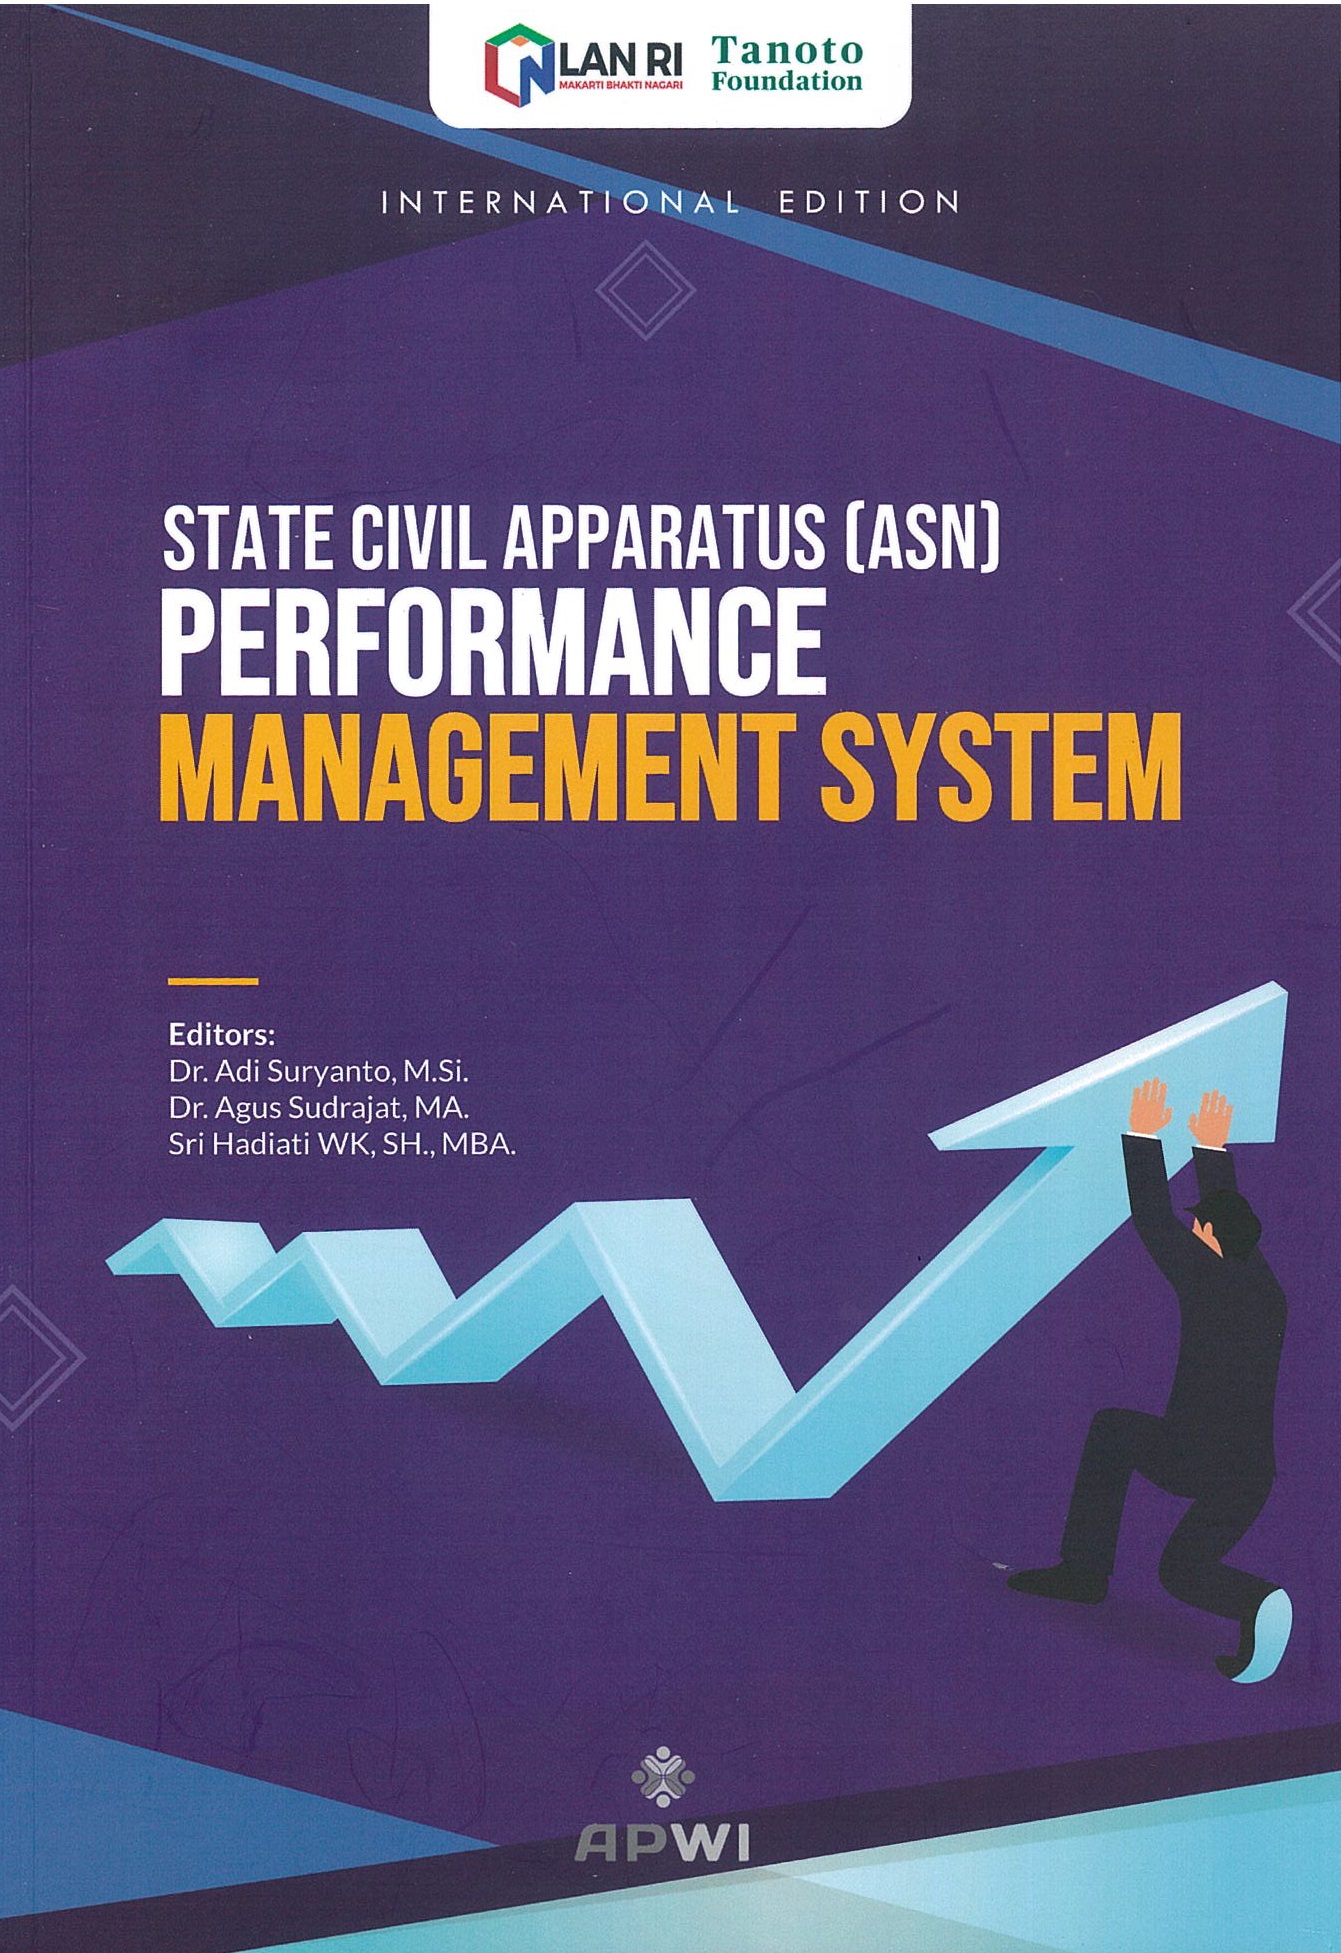 State civil apparatus (ASN) performance management system